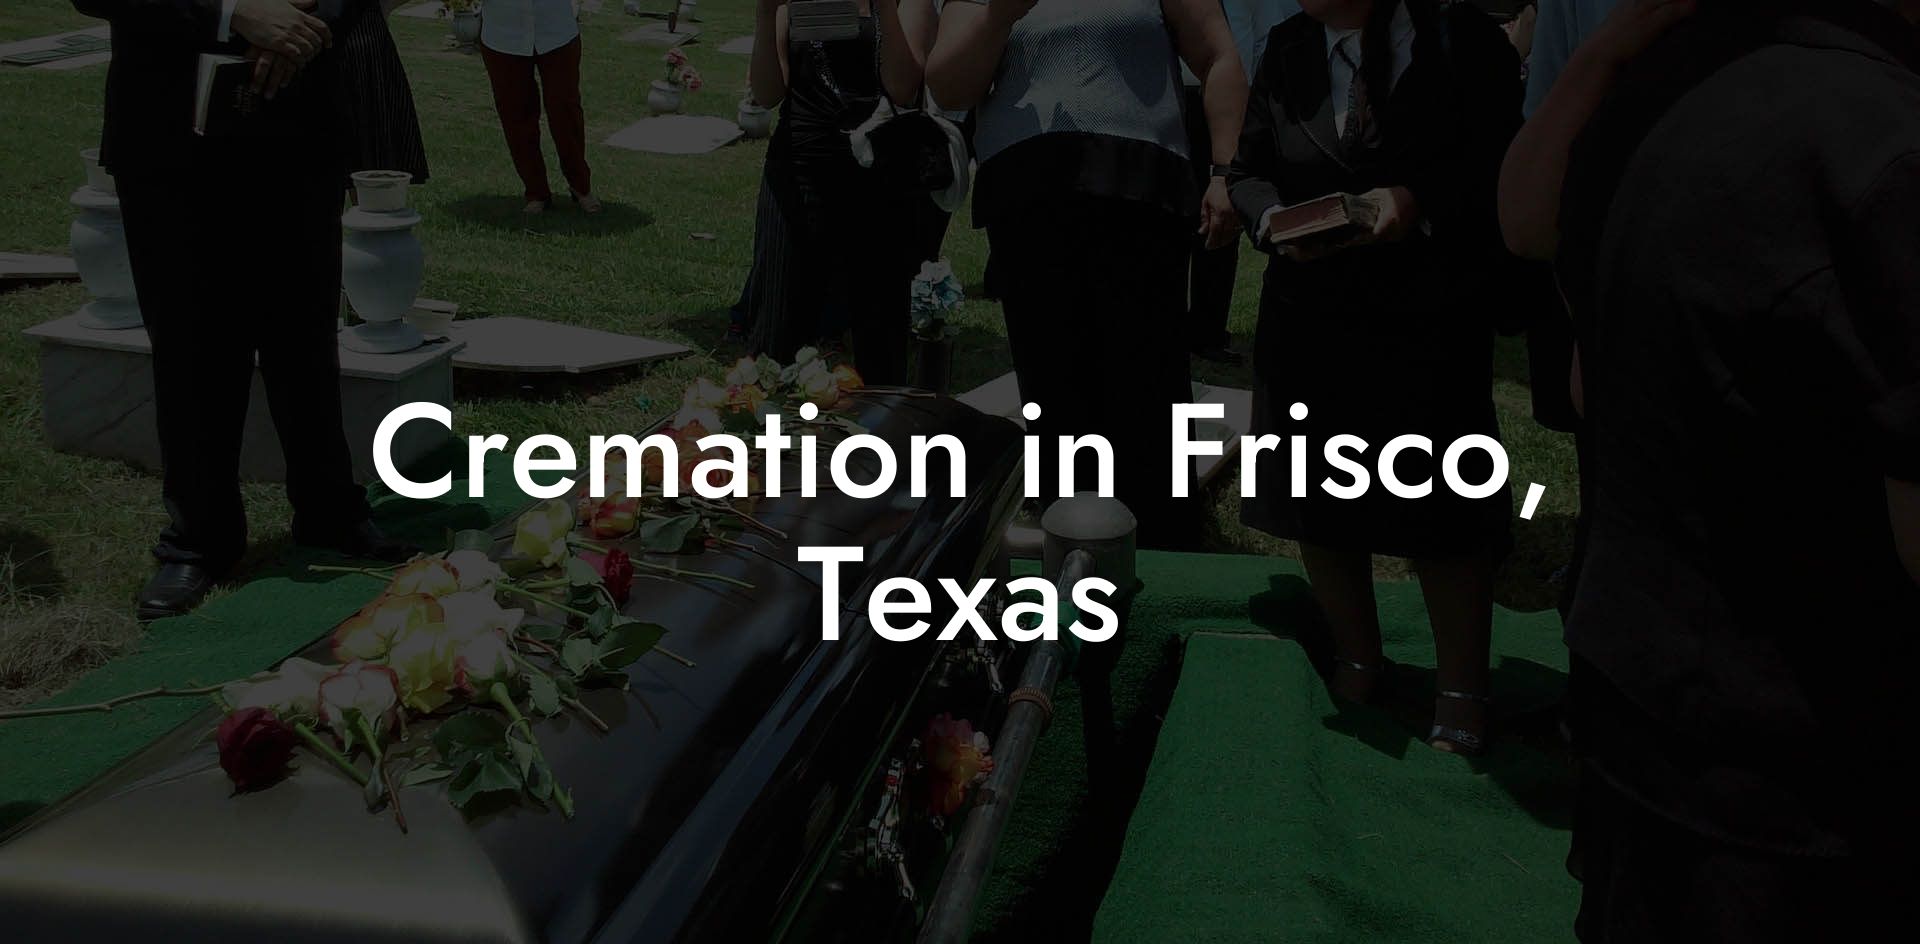 Cremation in Frisco, Texas